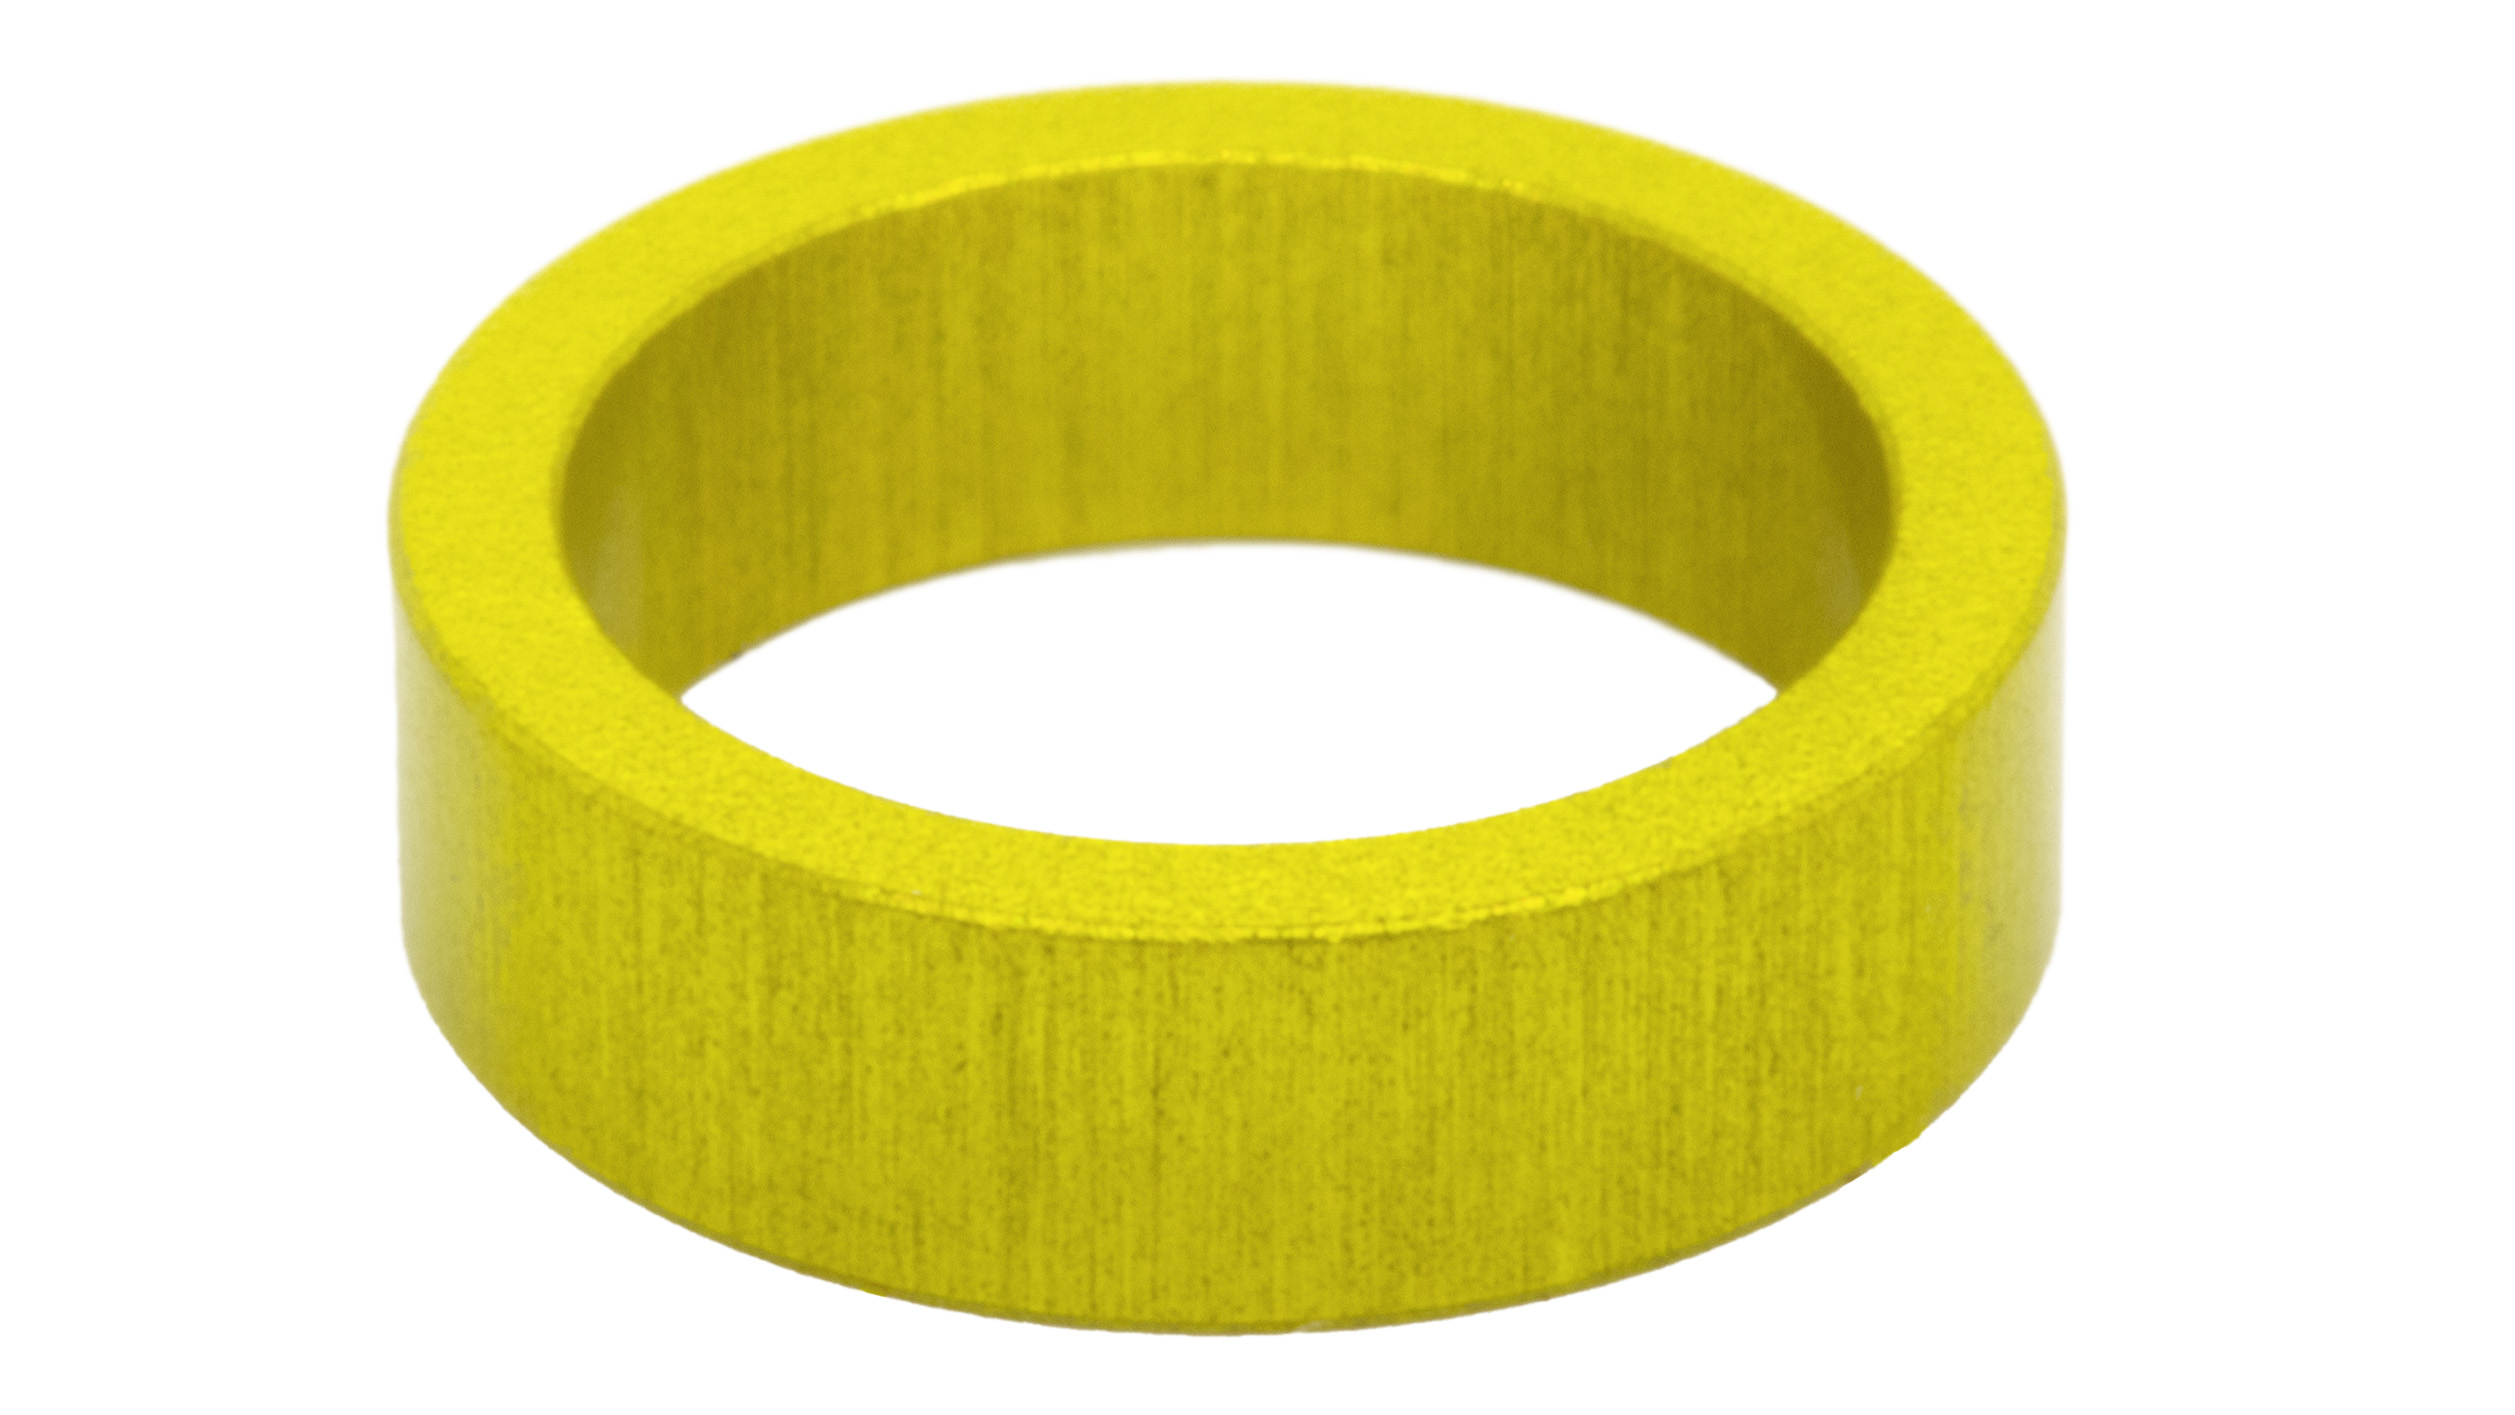 Identifikationsring, gelb, für Petitpierre TSE, Klinge 0,8 mm